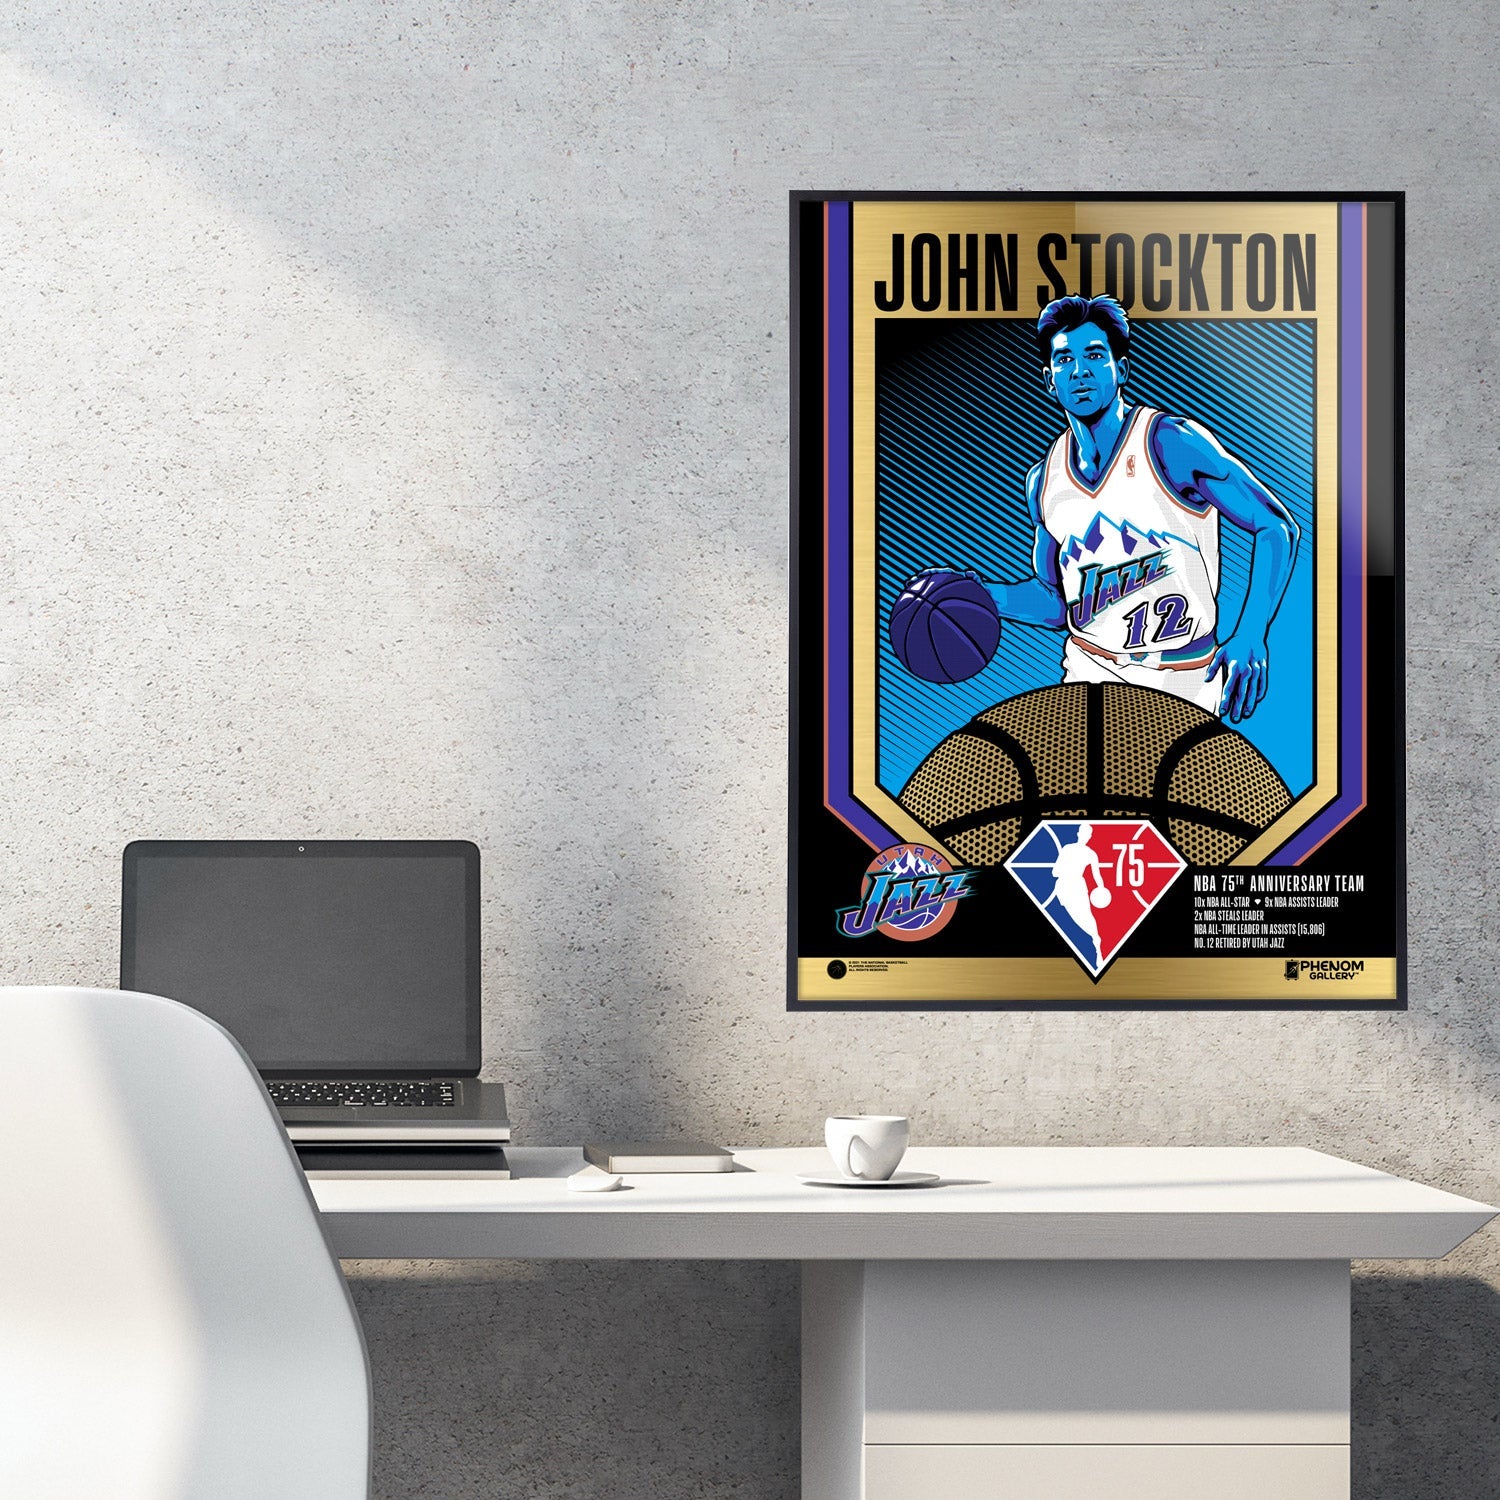 Utah Jazz 75th Anniversary John Stockton 18x24 Goil Foil